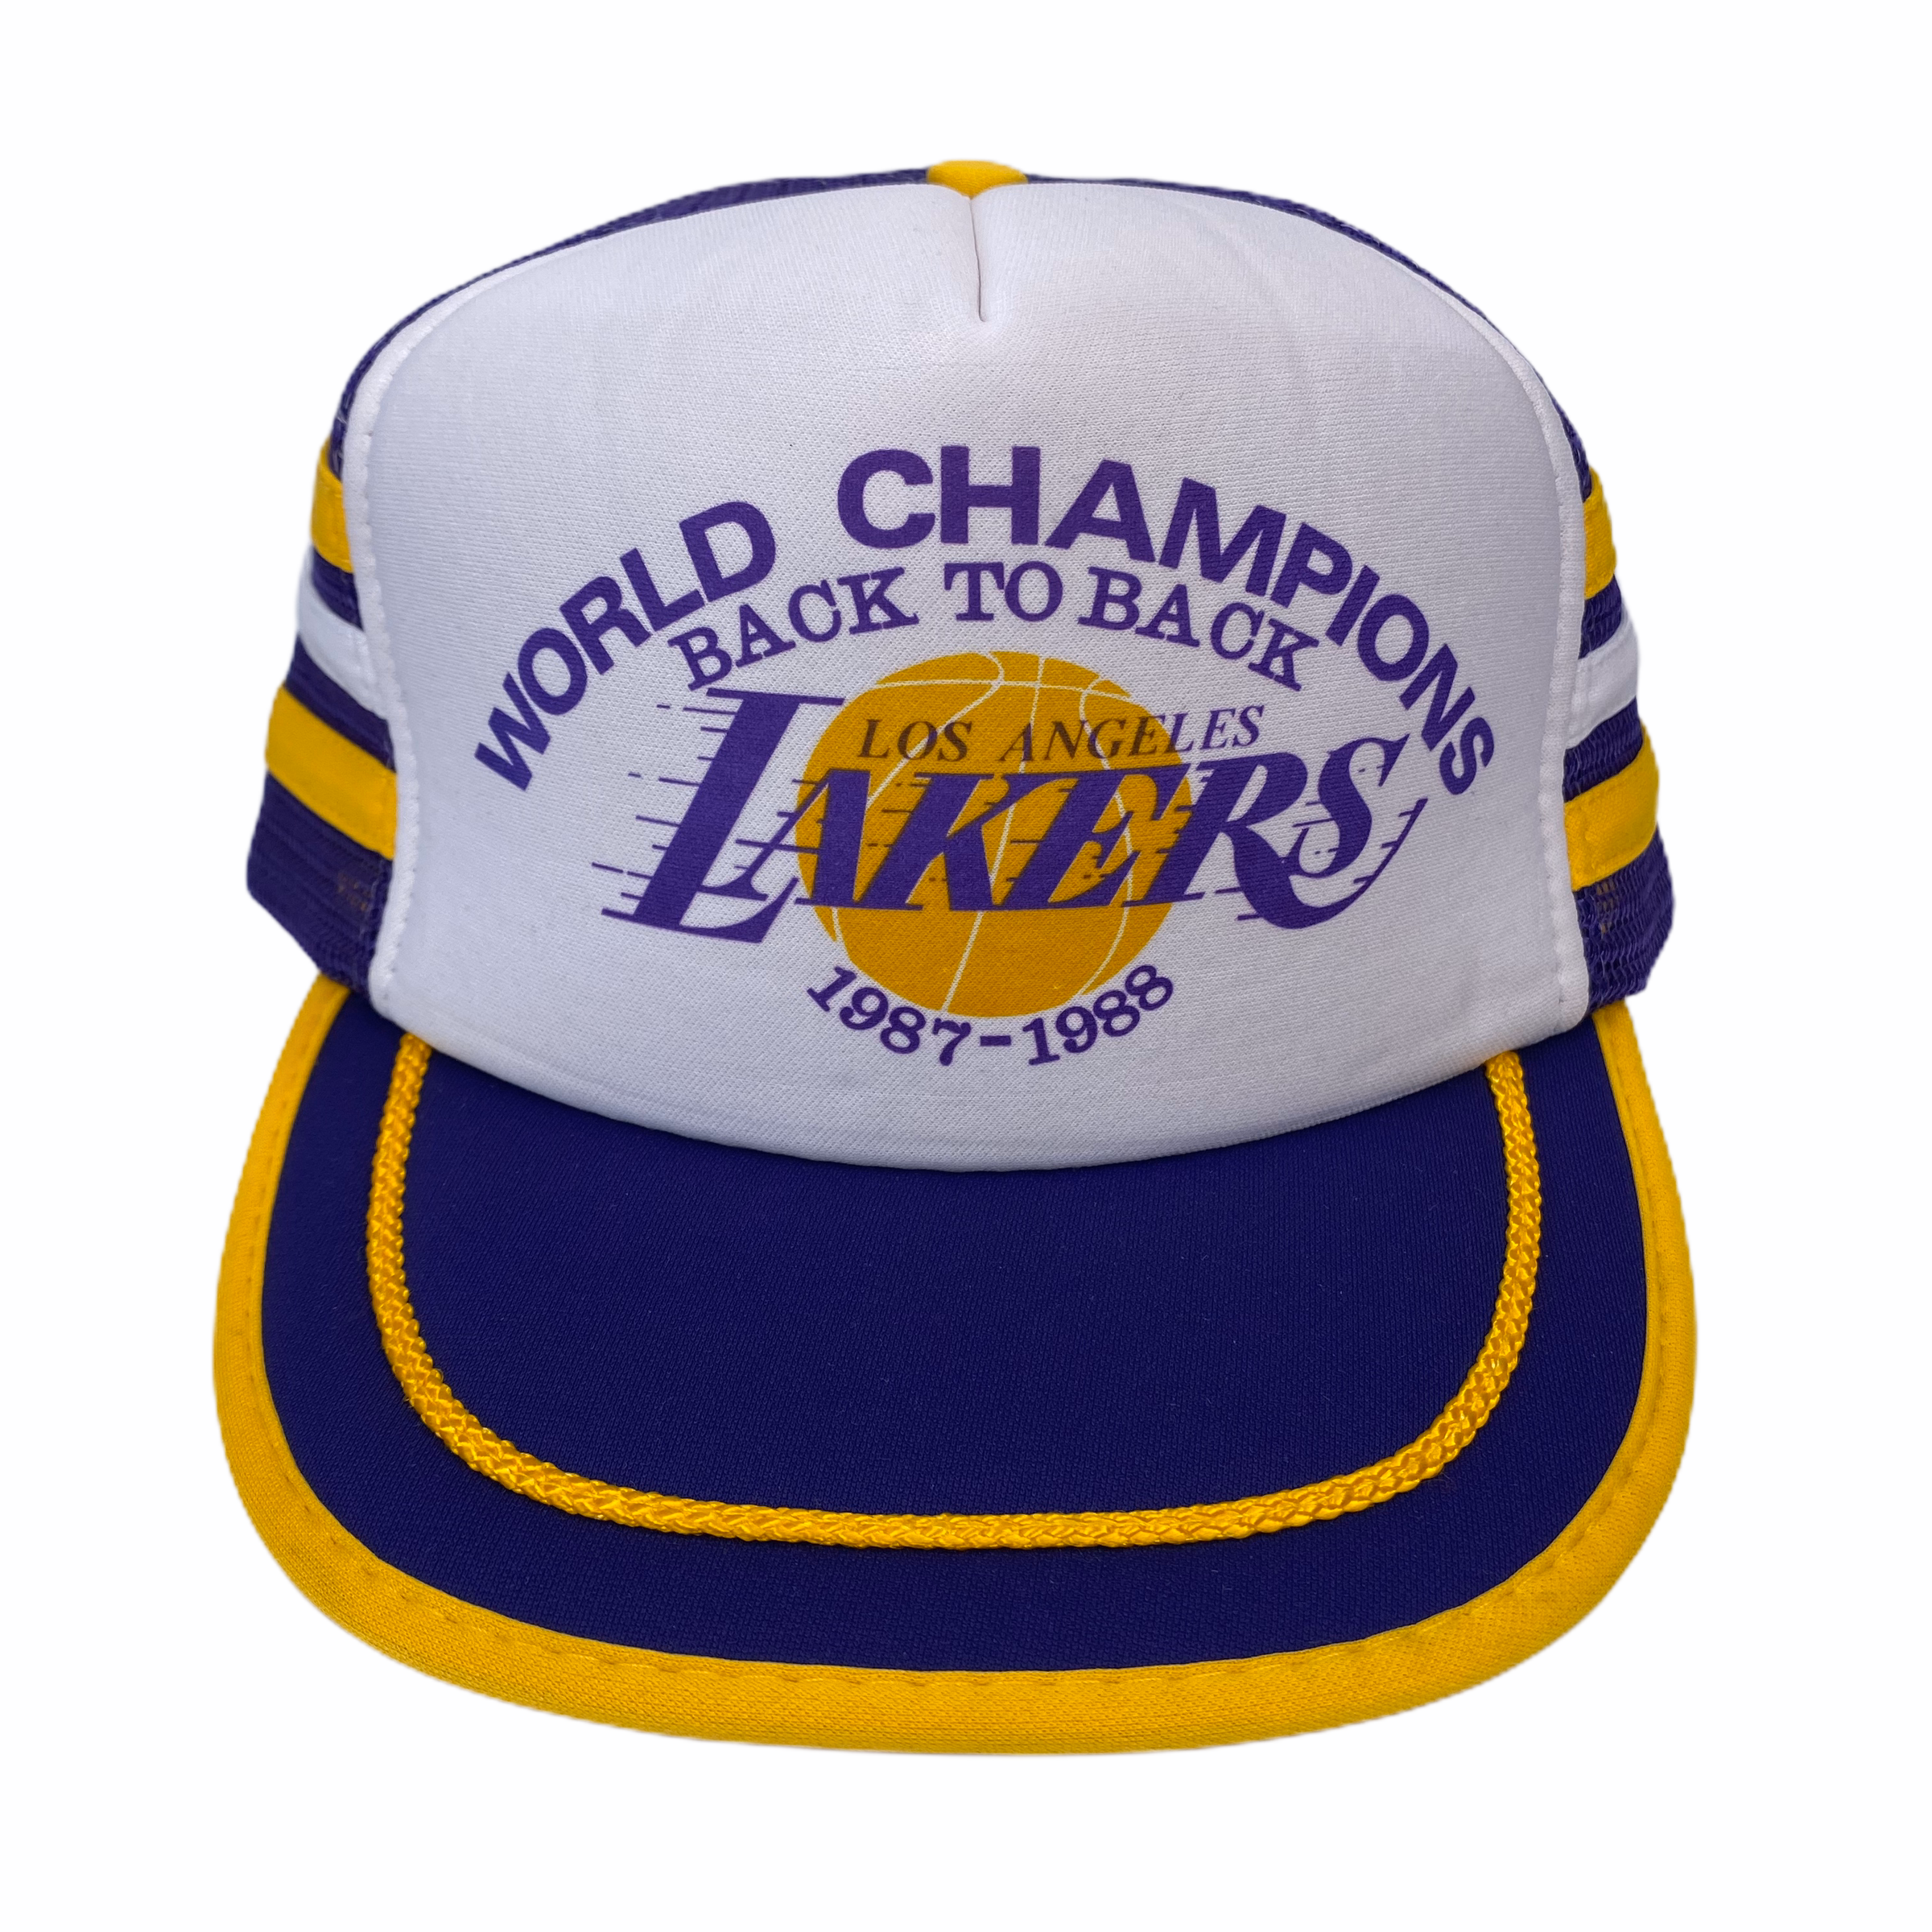 Vintage 1987-1988 Los Angeles Lakers World Champions Three Stripes